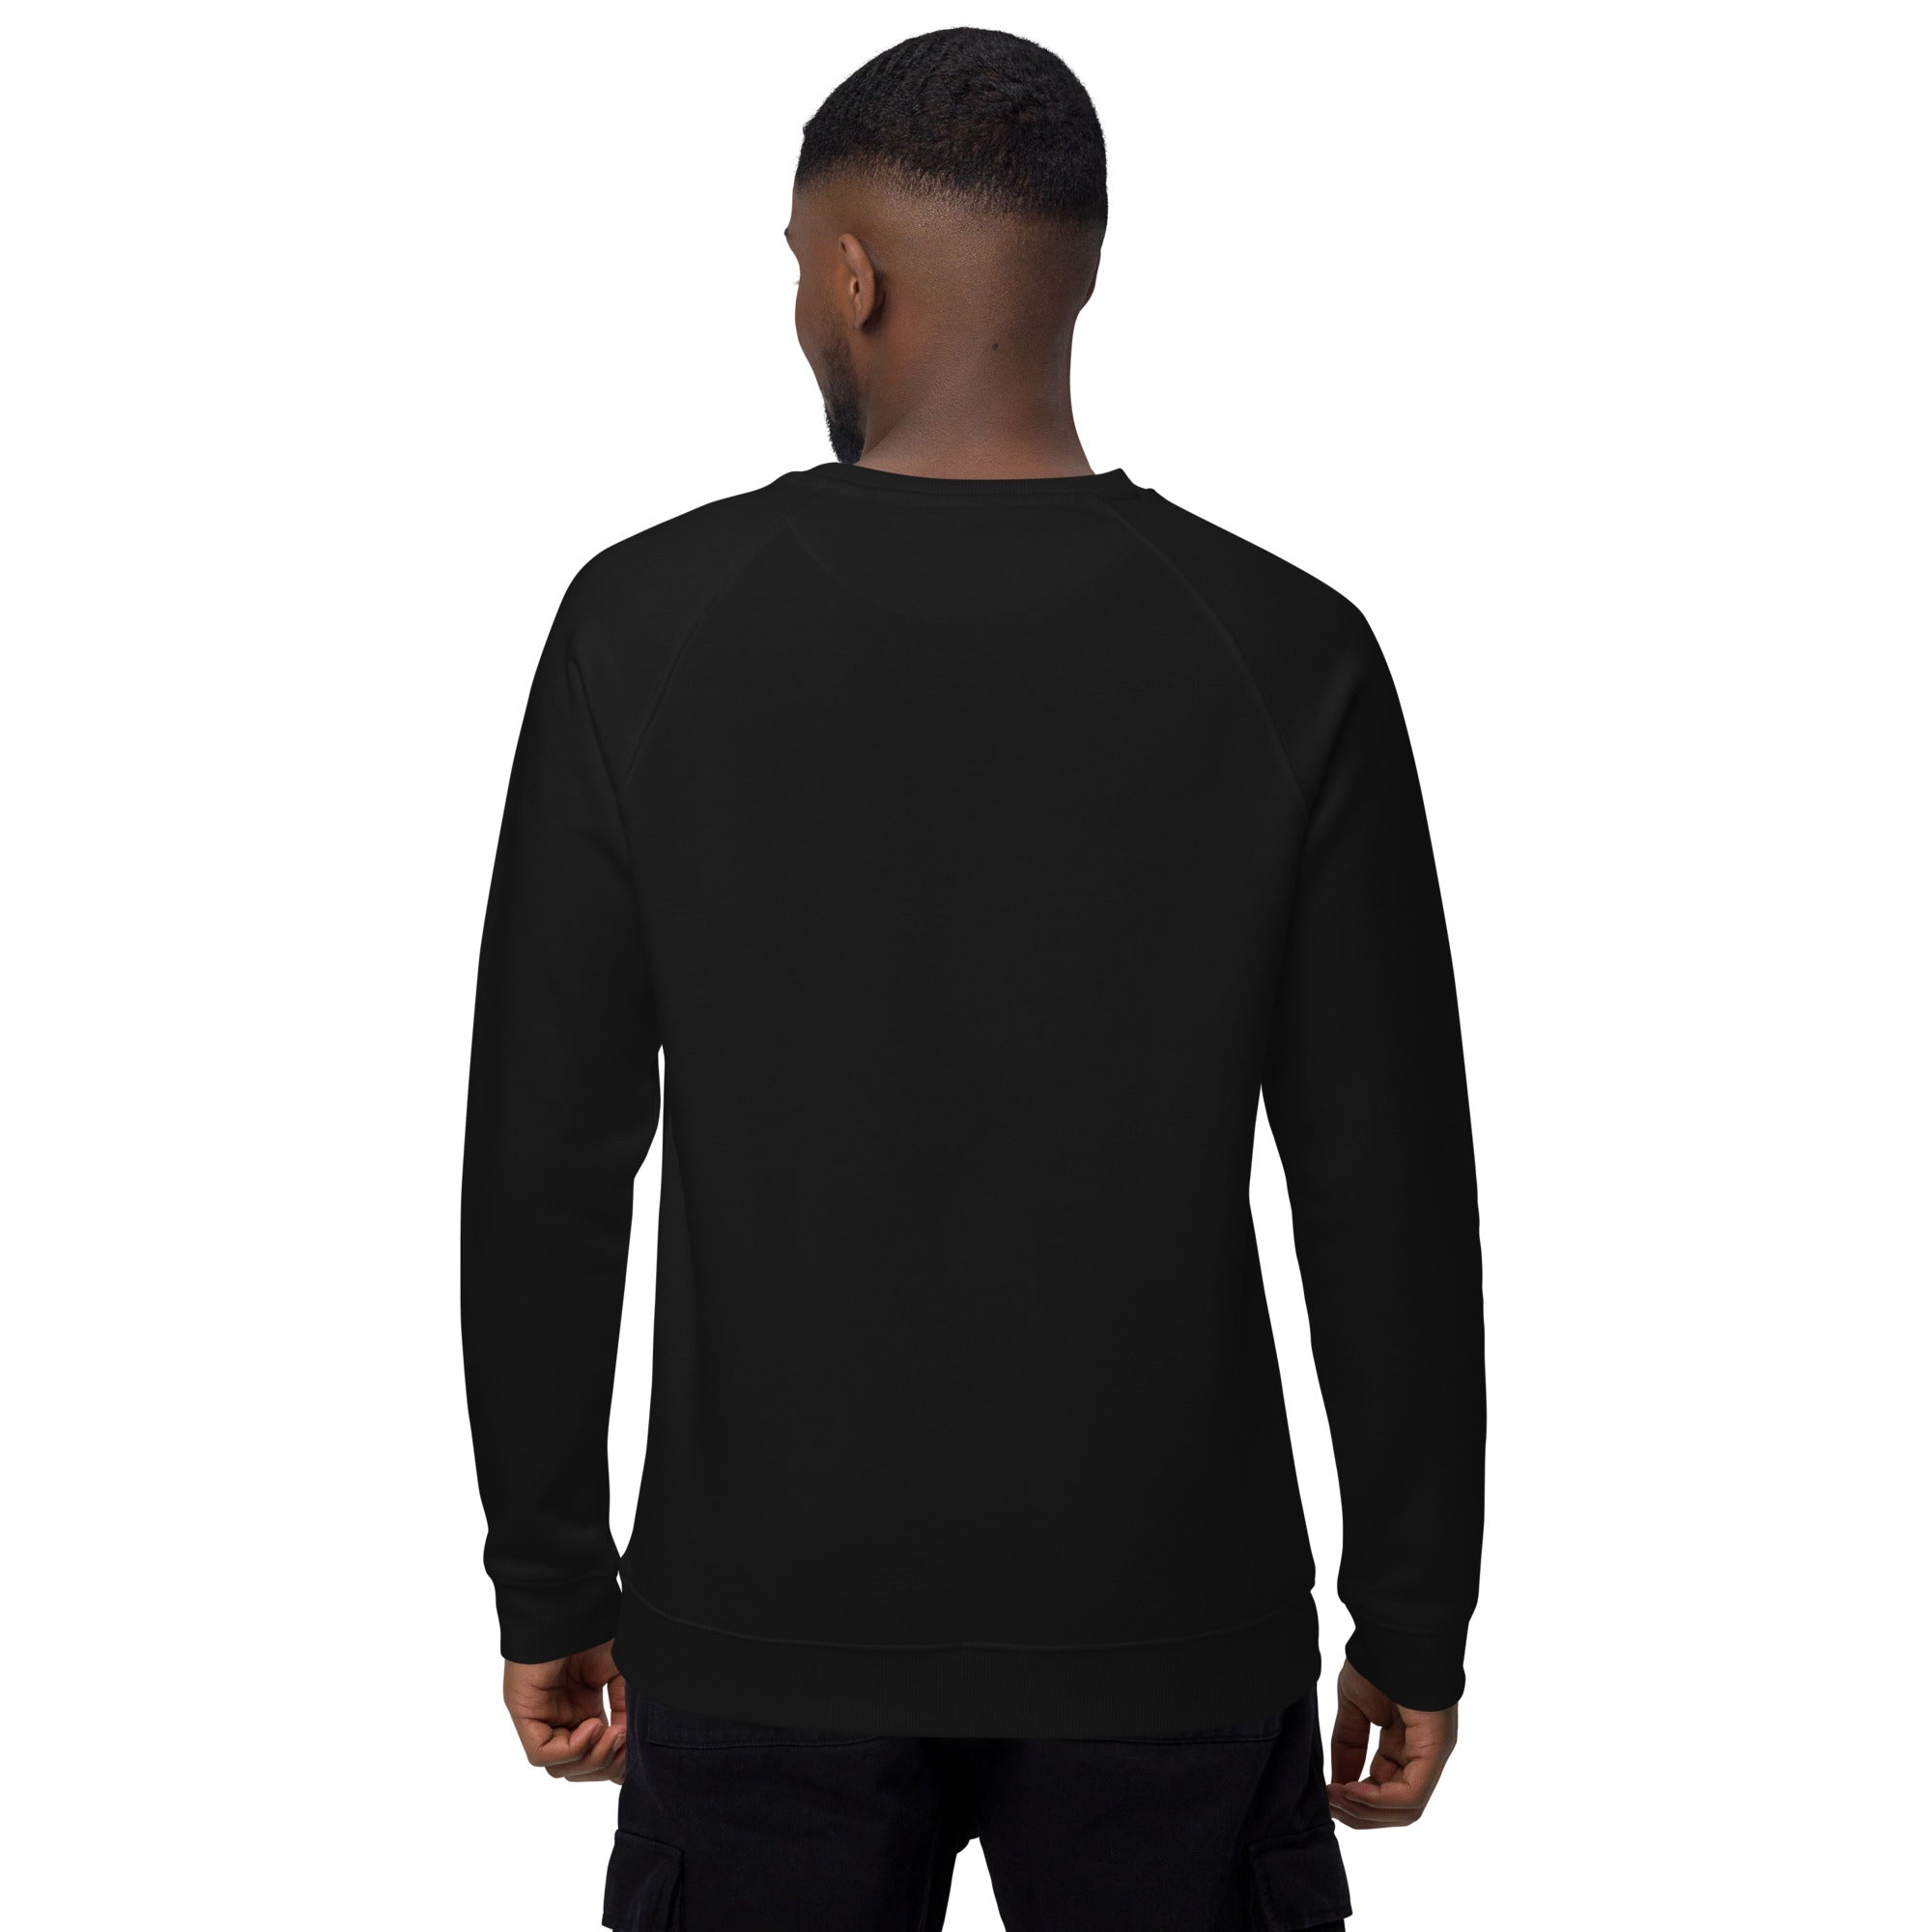 Bowie Logo White - Black Unisex organic raglan sweatshirt